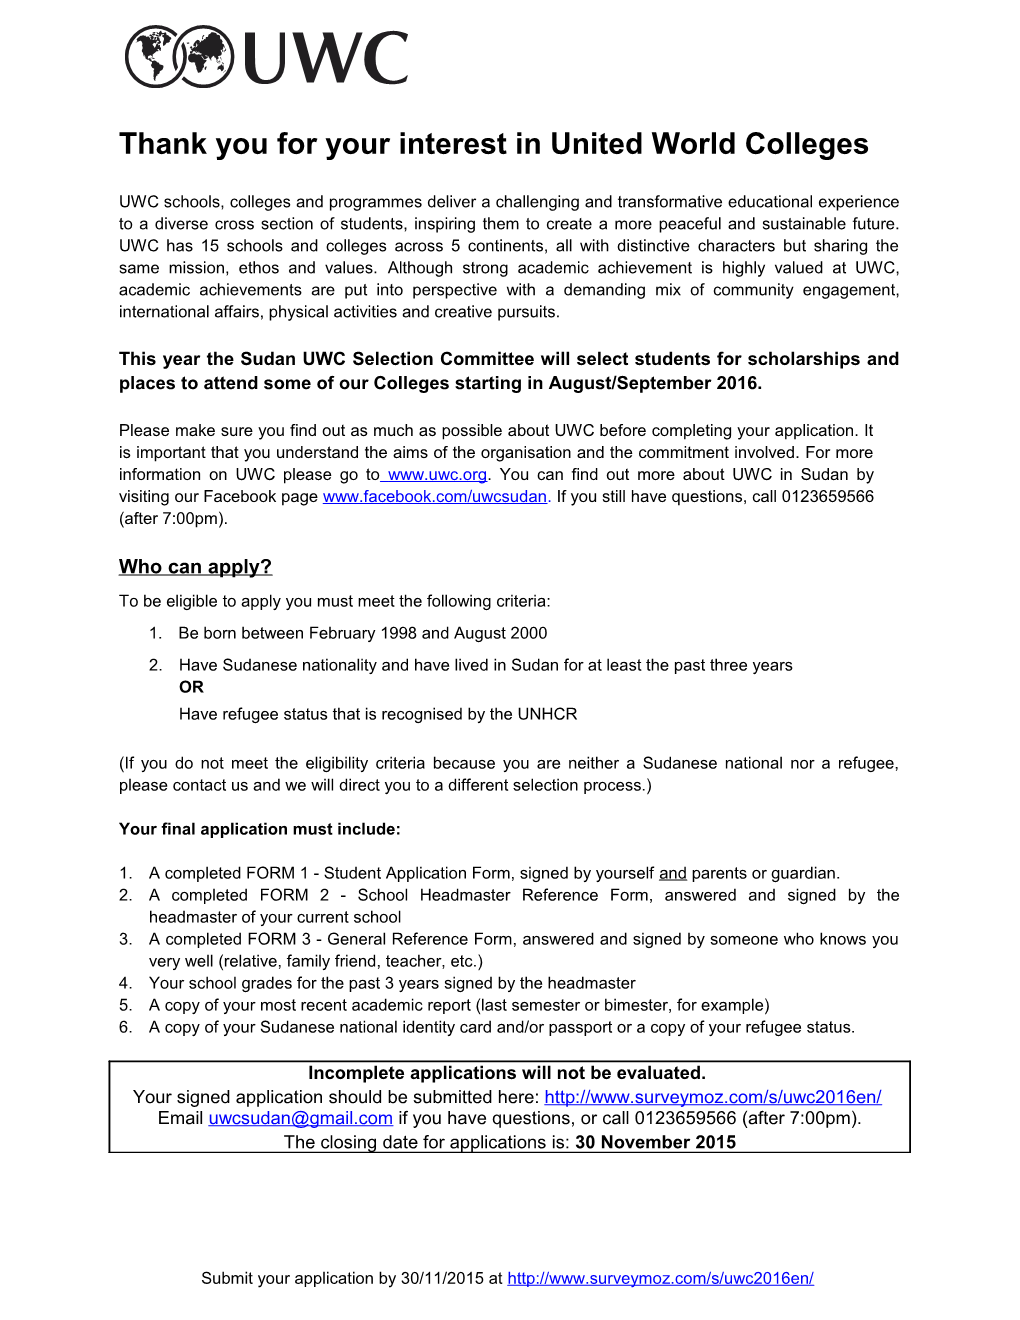 UWC Sudan Application Form (English)